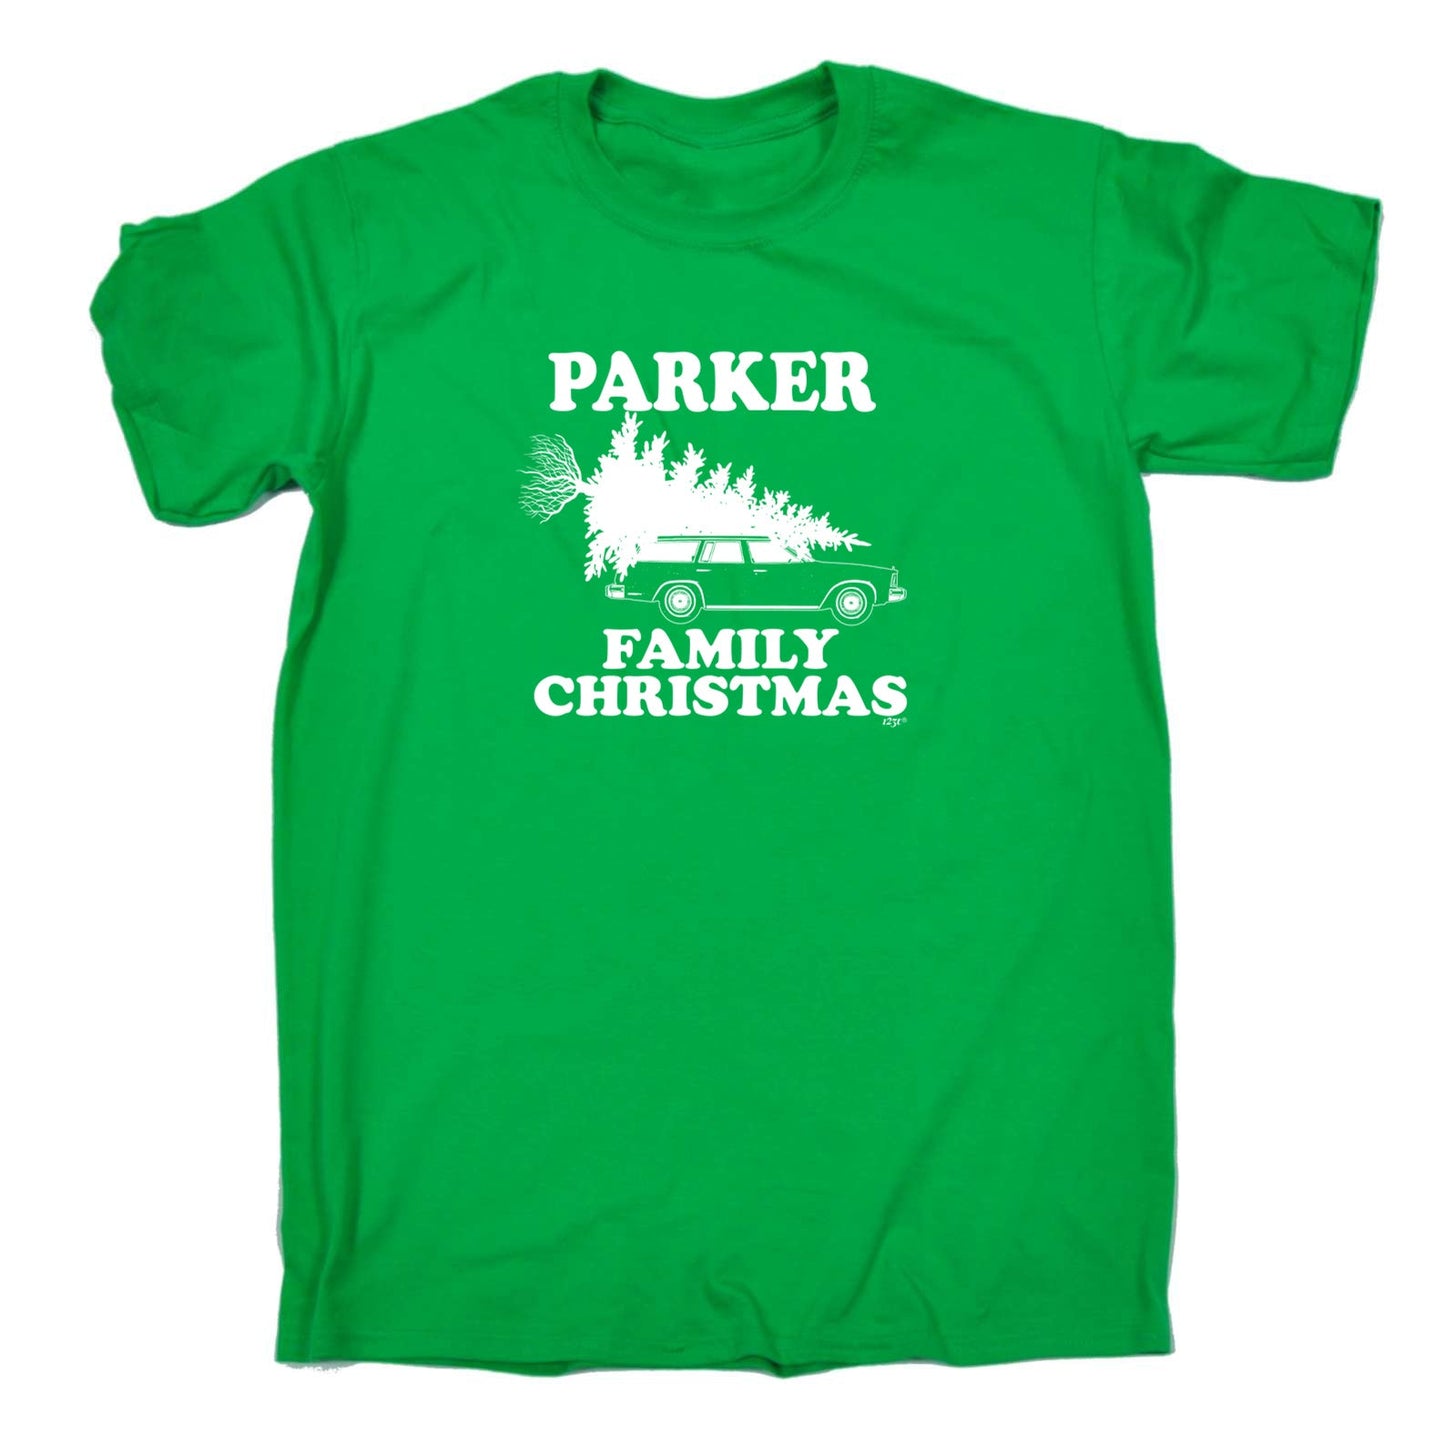 Family Christmas Parker - Mens Xmas Novelty T-Shirt / T Shirt